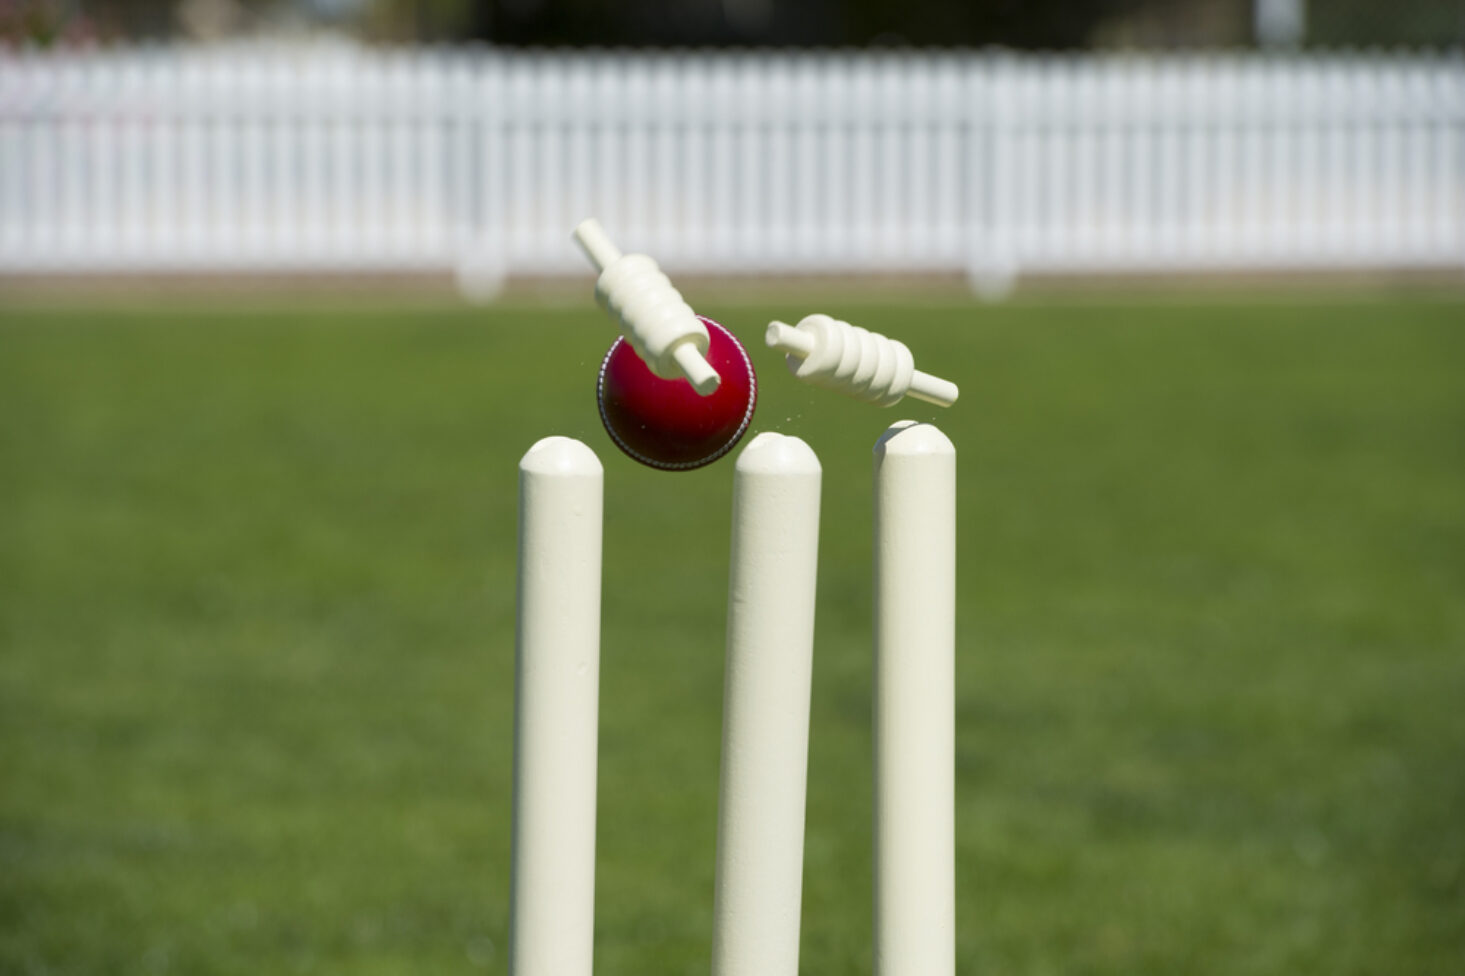 Cricket Stumps Review